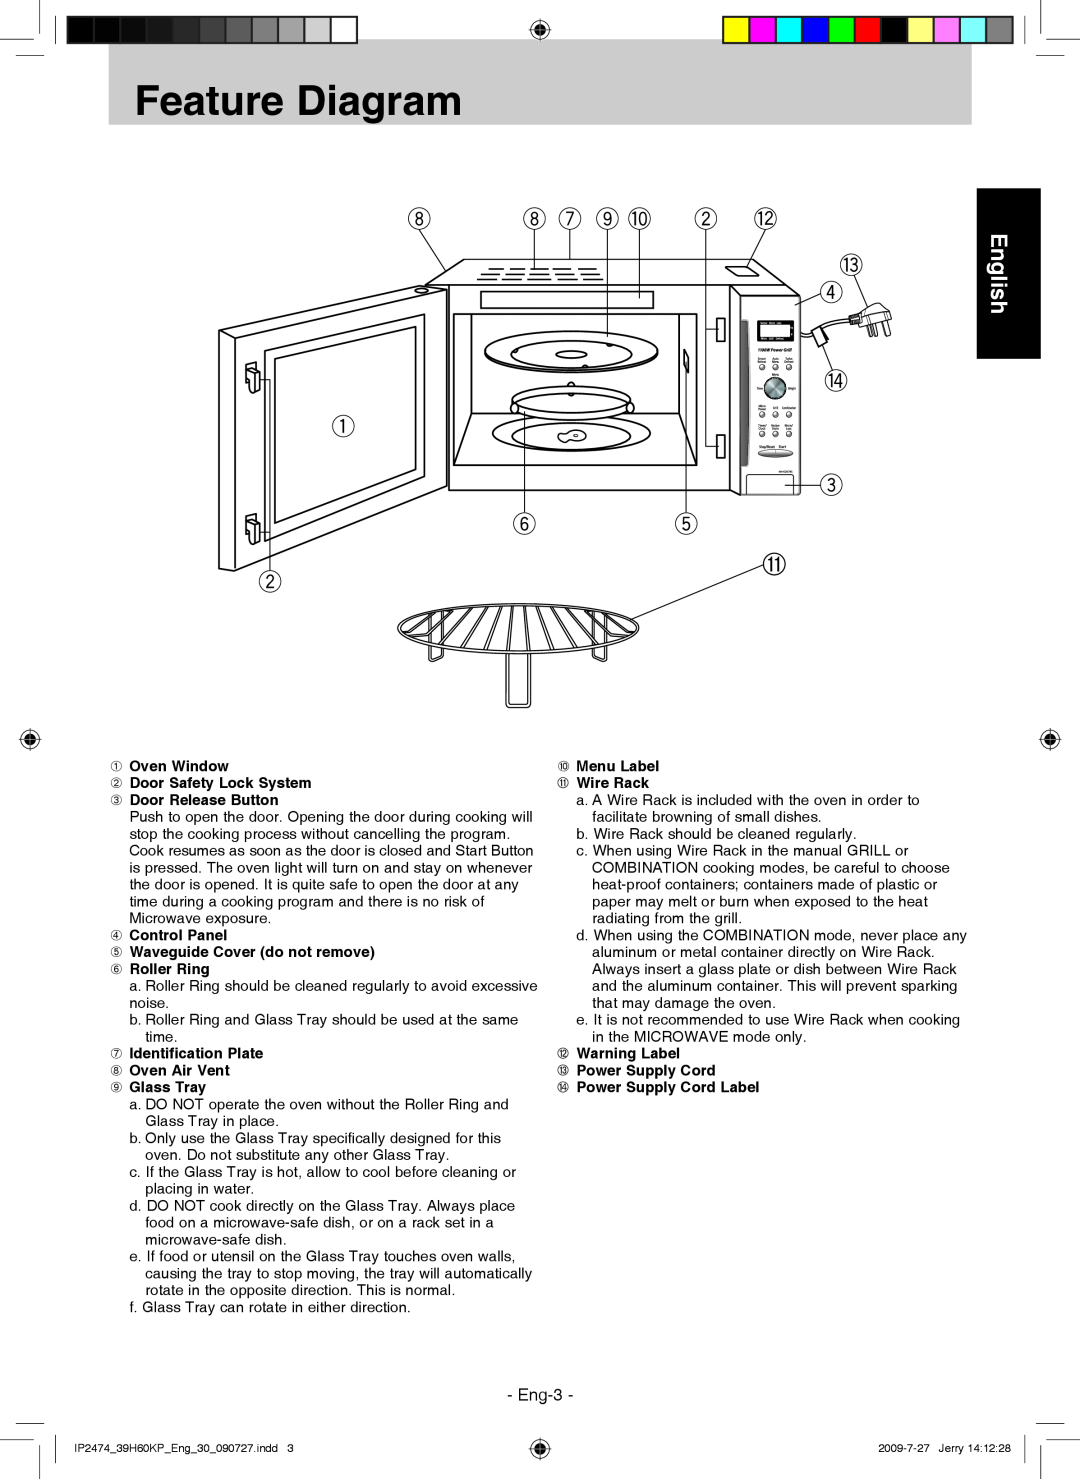 Panasonic NN-GD579S Feature Diagram, English, Eng-3,  Oven Window, • Identification Plate – Oven Air Vent — Glass Tray 